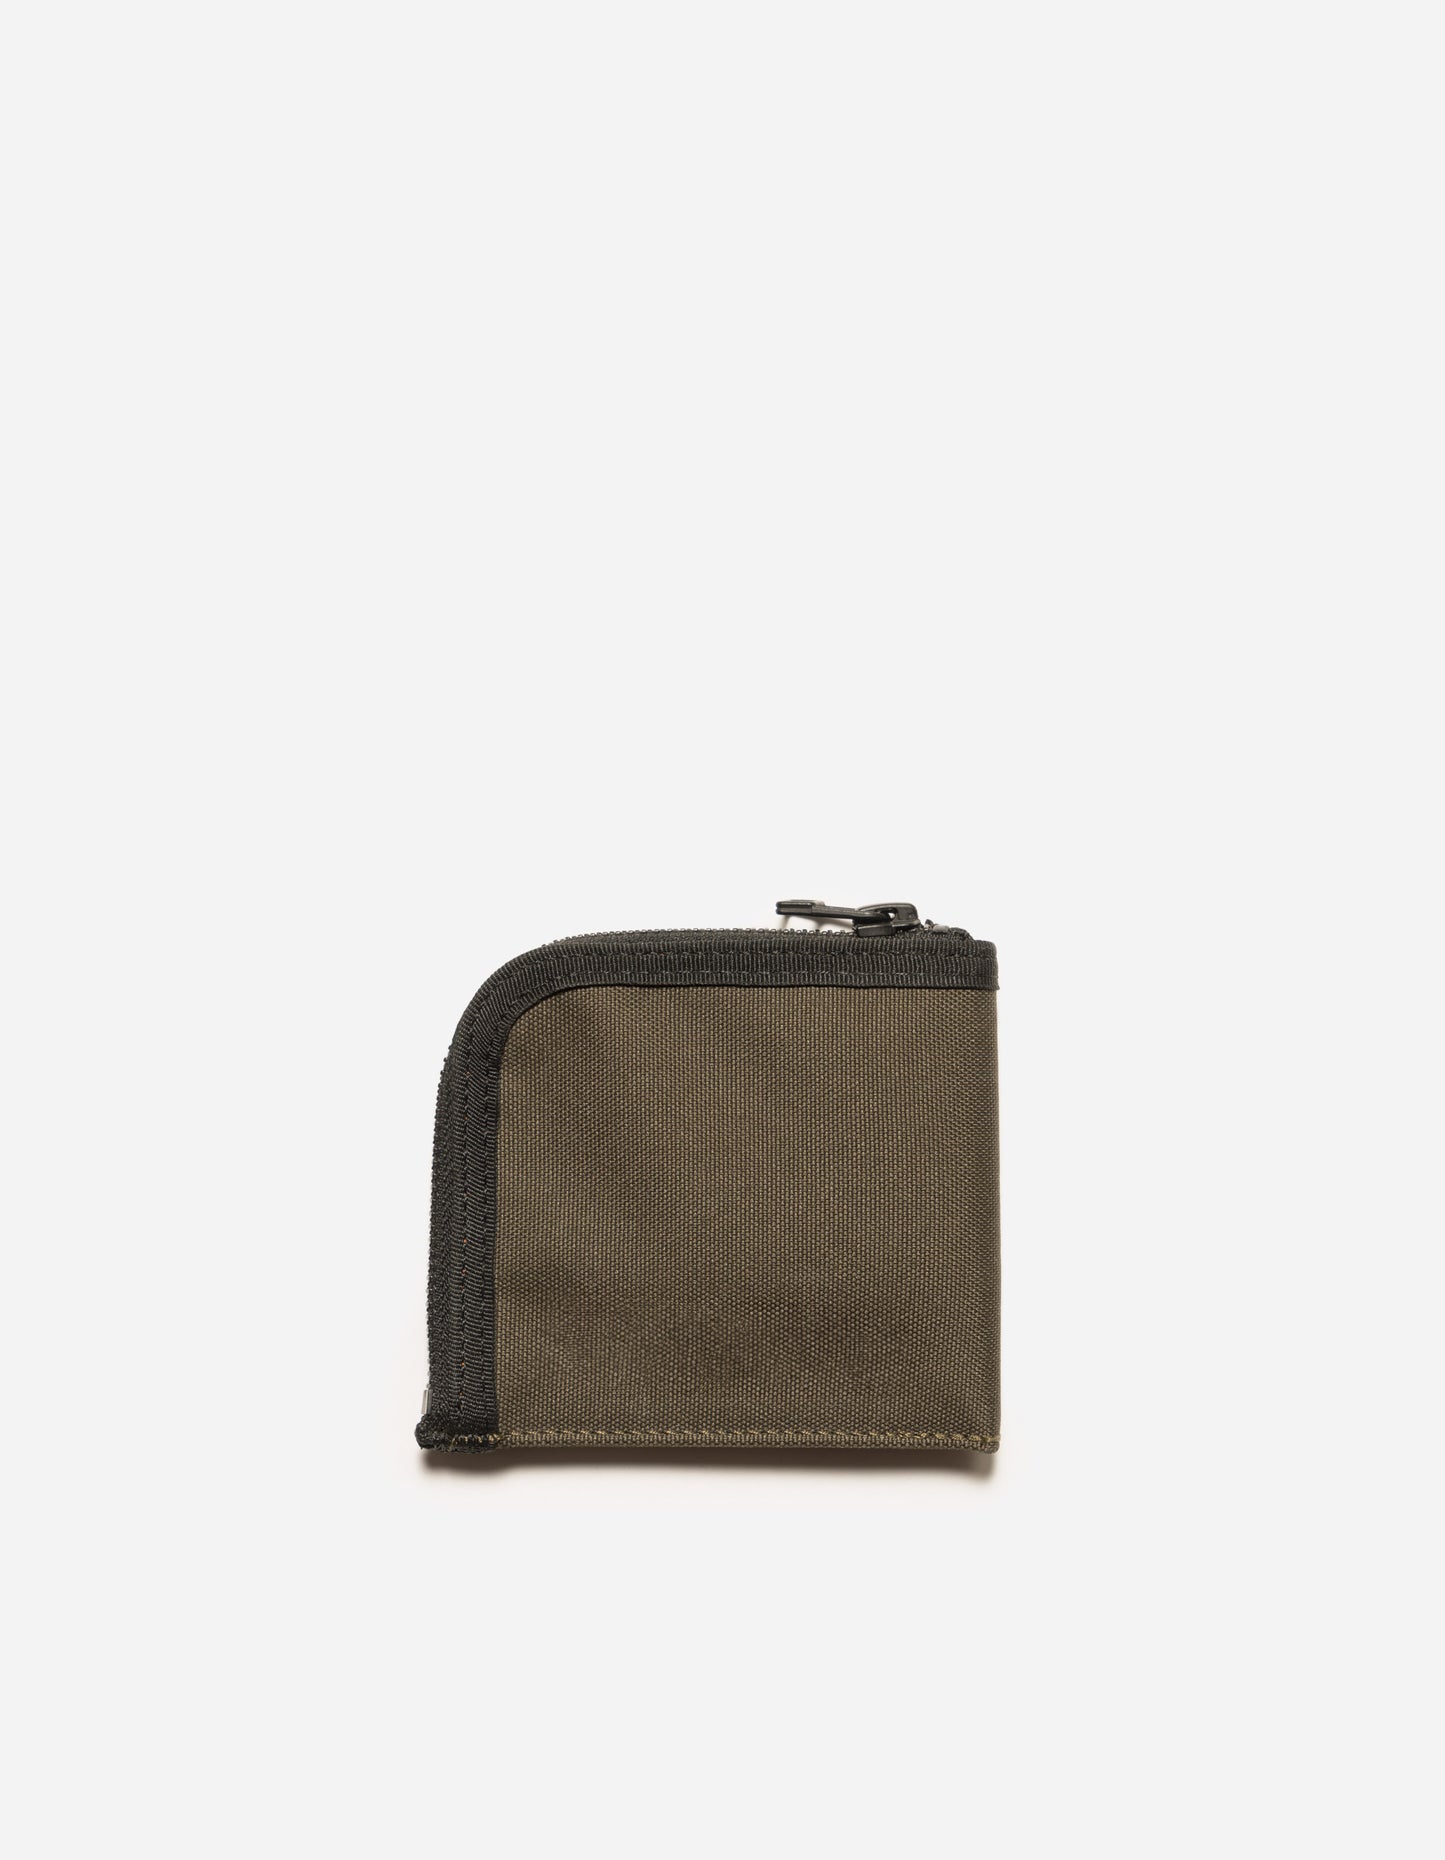 9112 Wallet Olive · 600D Nylon